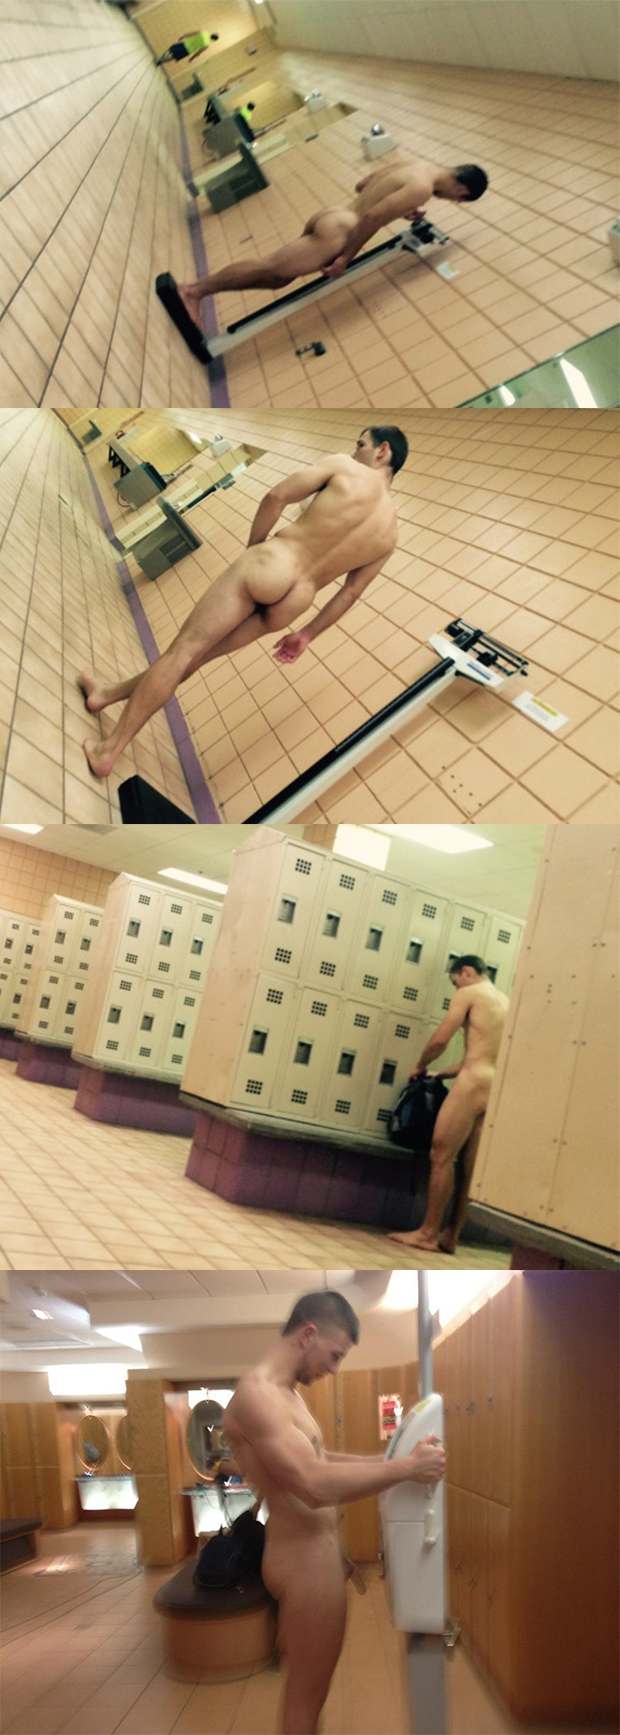 nude guys weigh in lockerroom